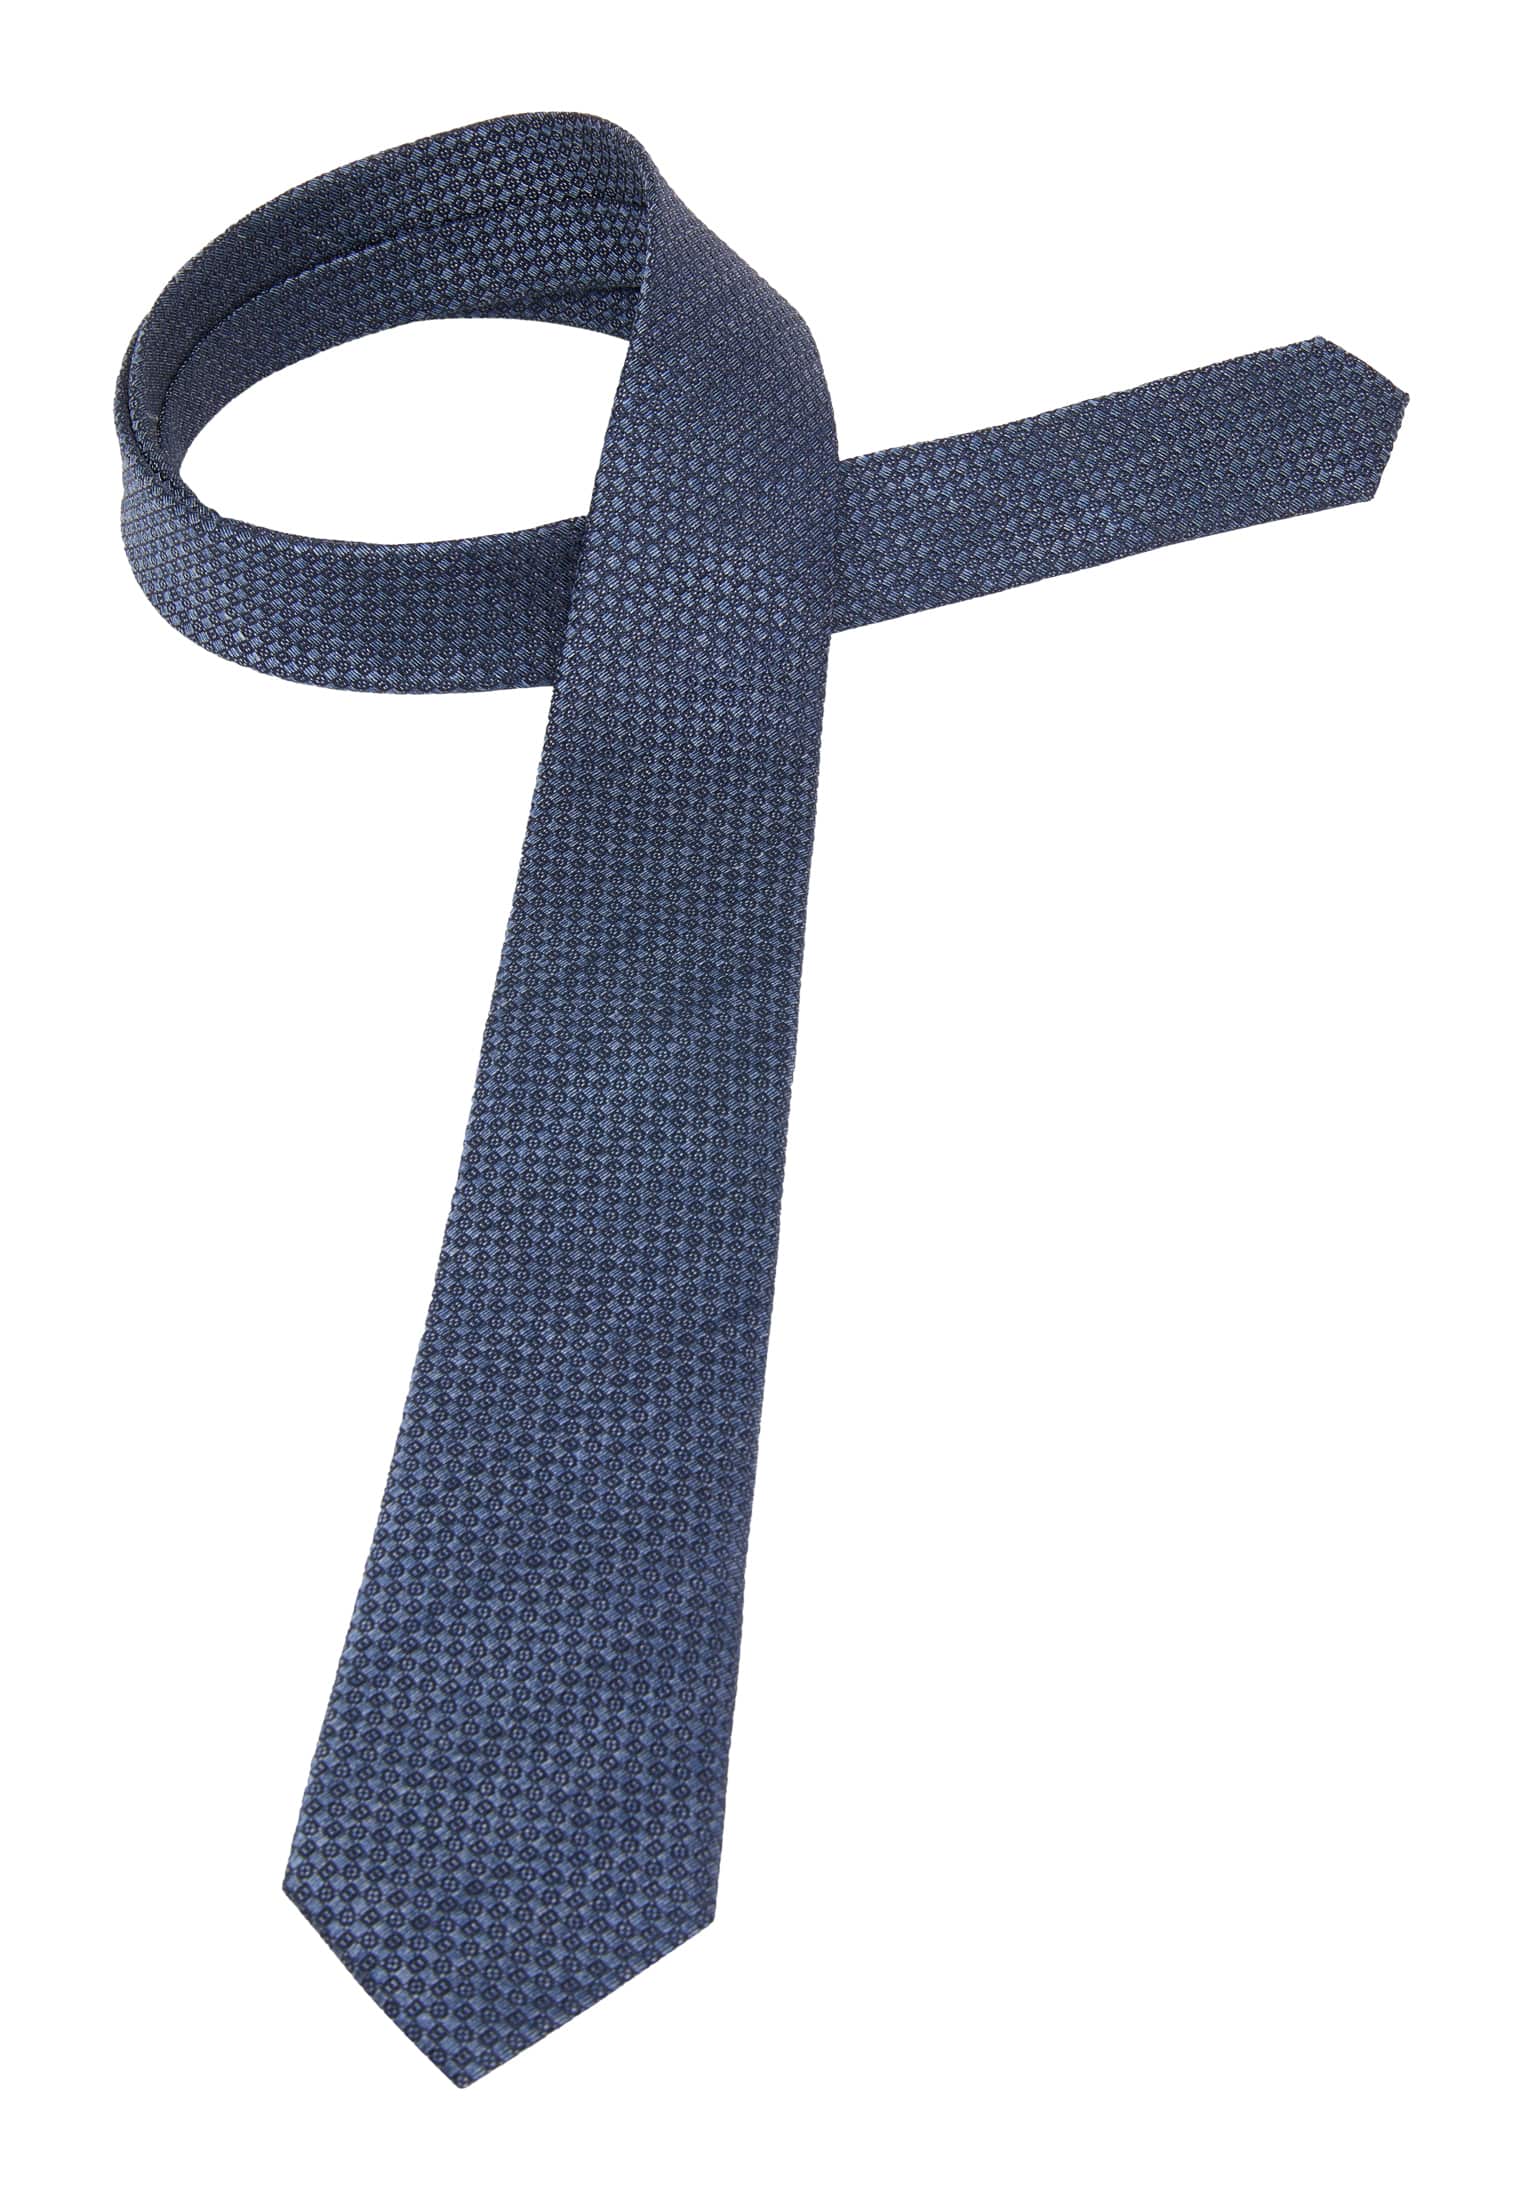 Krawatte in blaugrau strukturiert | blaugrau | 142 | 1AC02045-01-63-142